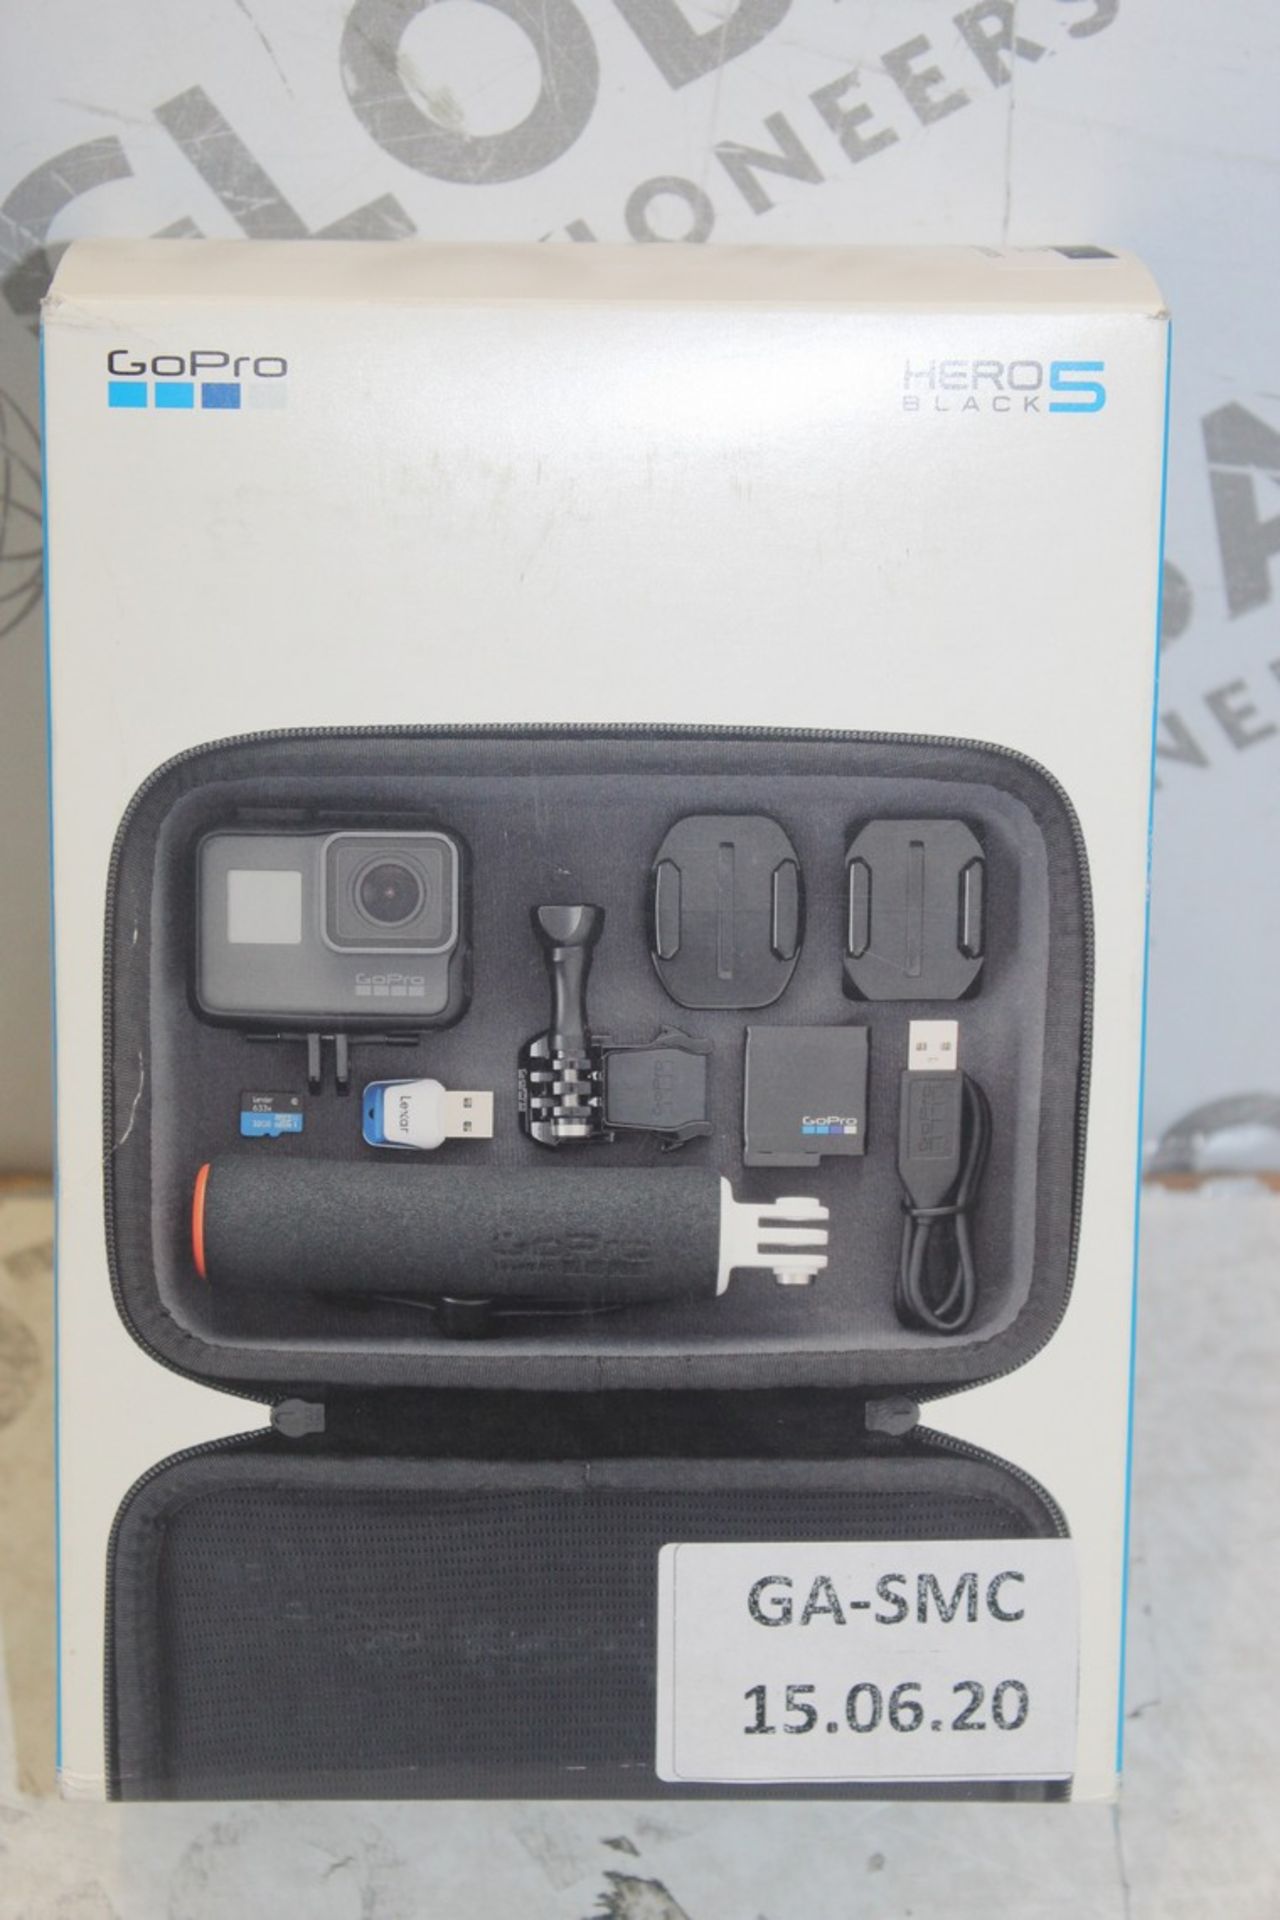 Boxed Gopro Hero 5 Black Edition Action Camera Bun